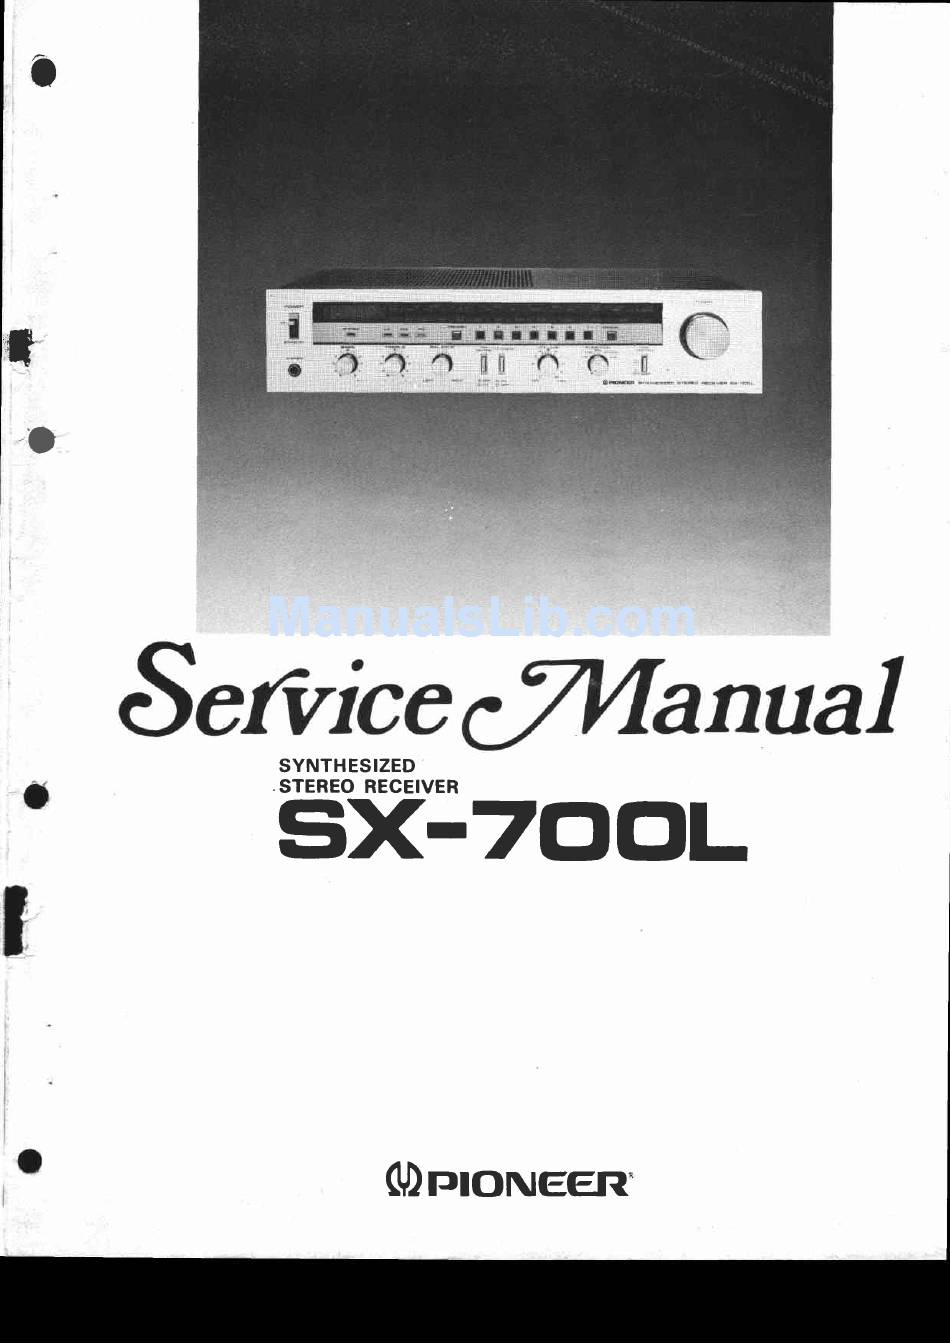 PIONEER SX-700L SERVICE MANUAL Pdf Download | ManualsLib